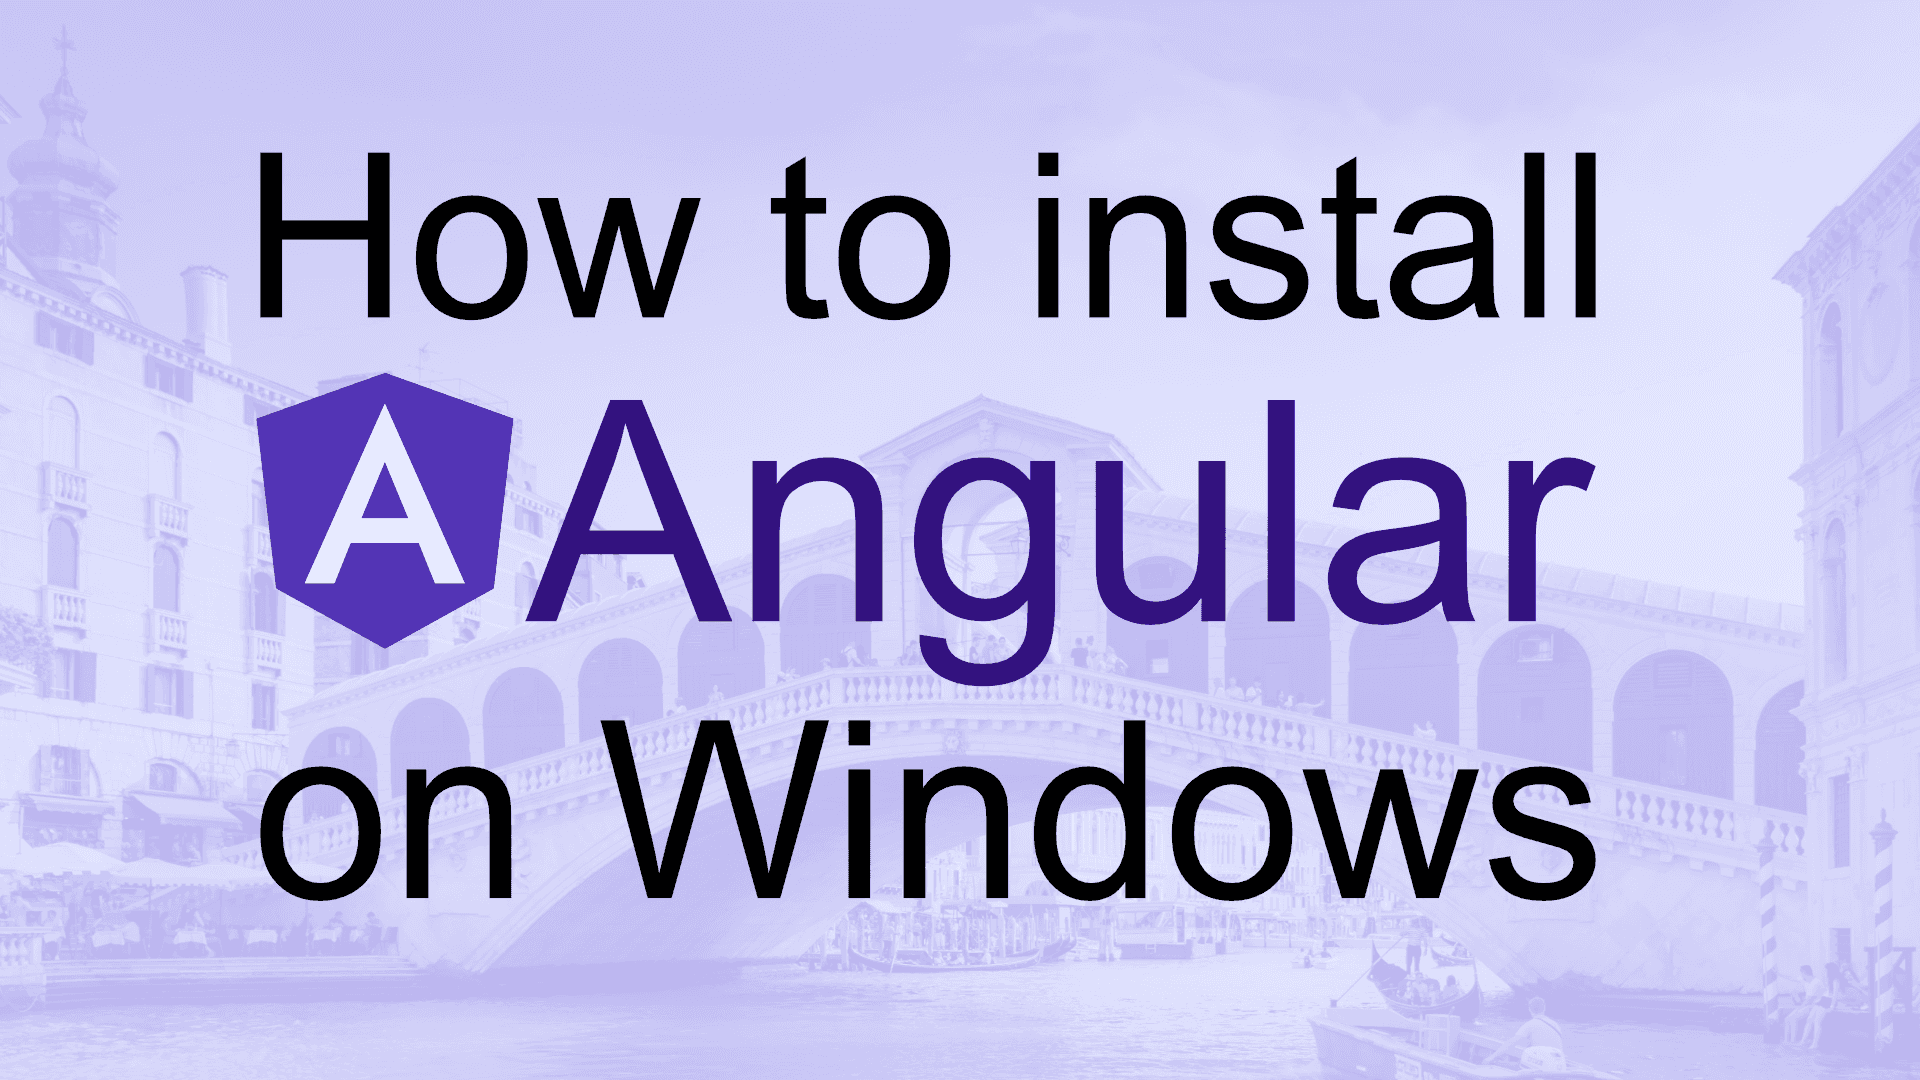 How to install Angular on Windows